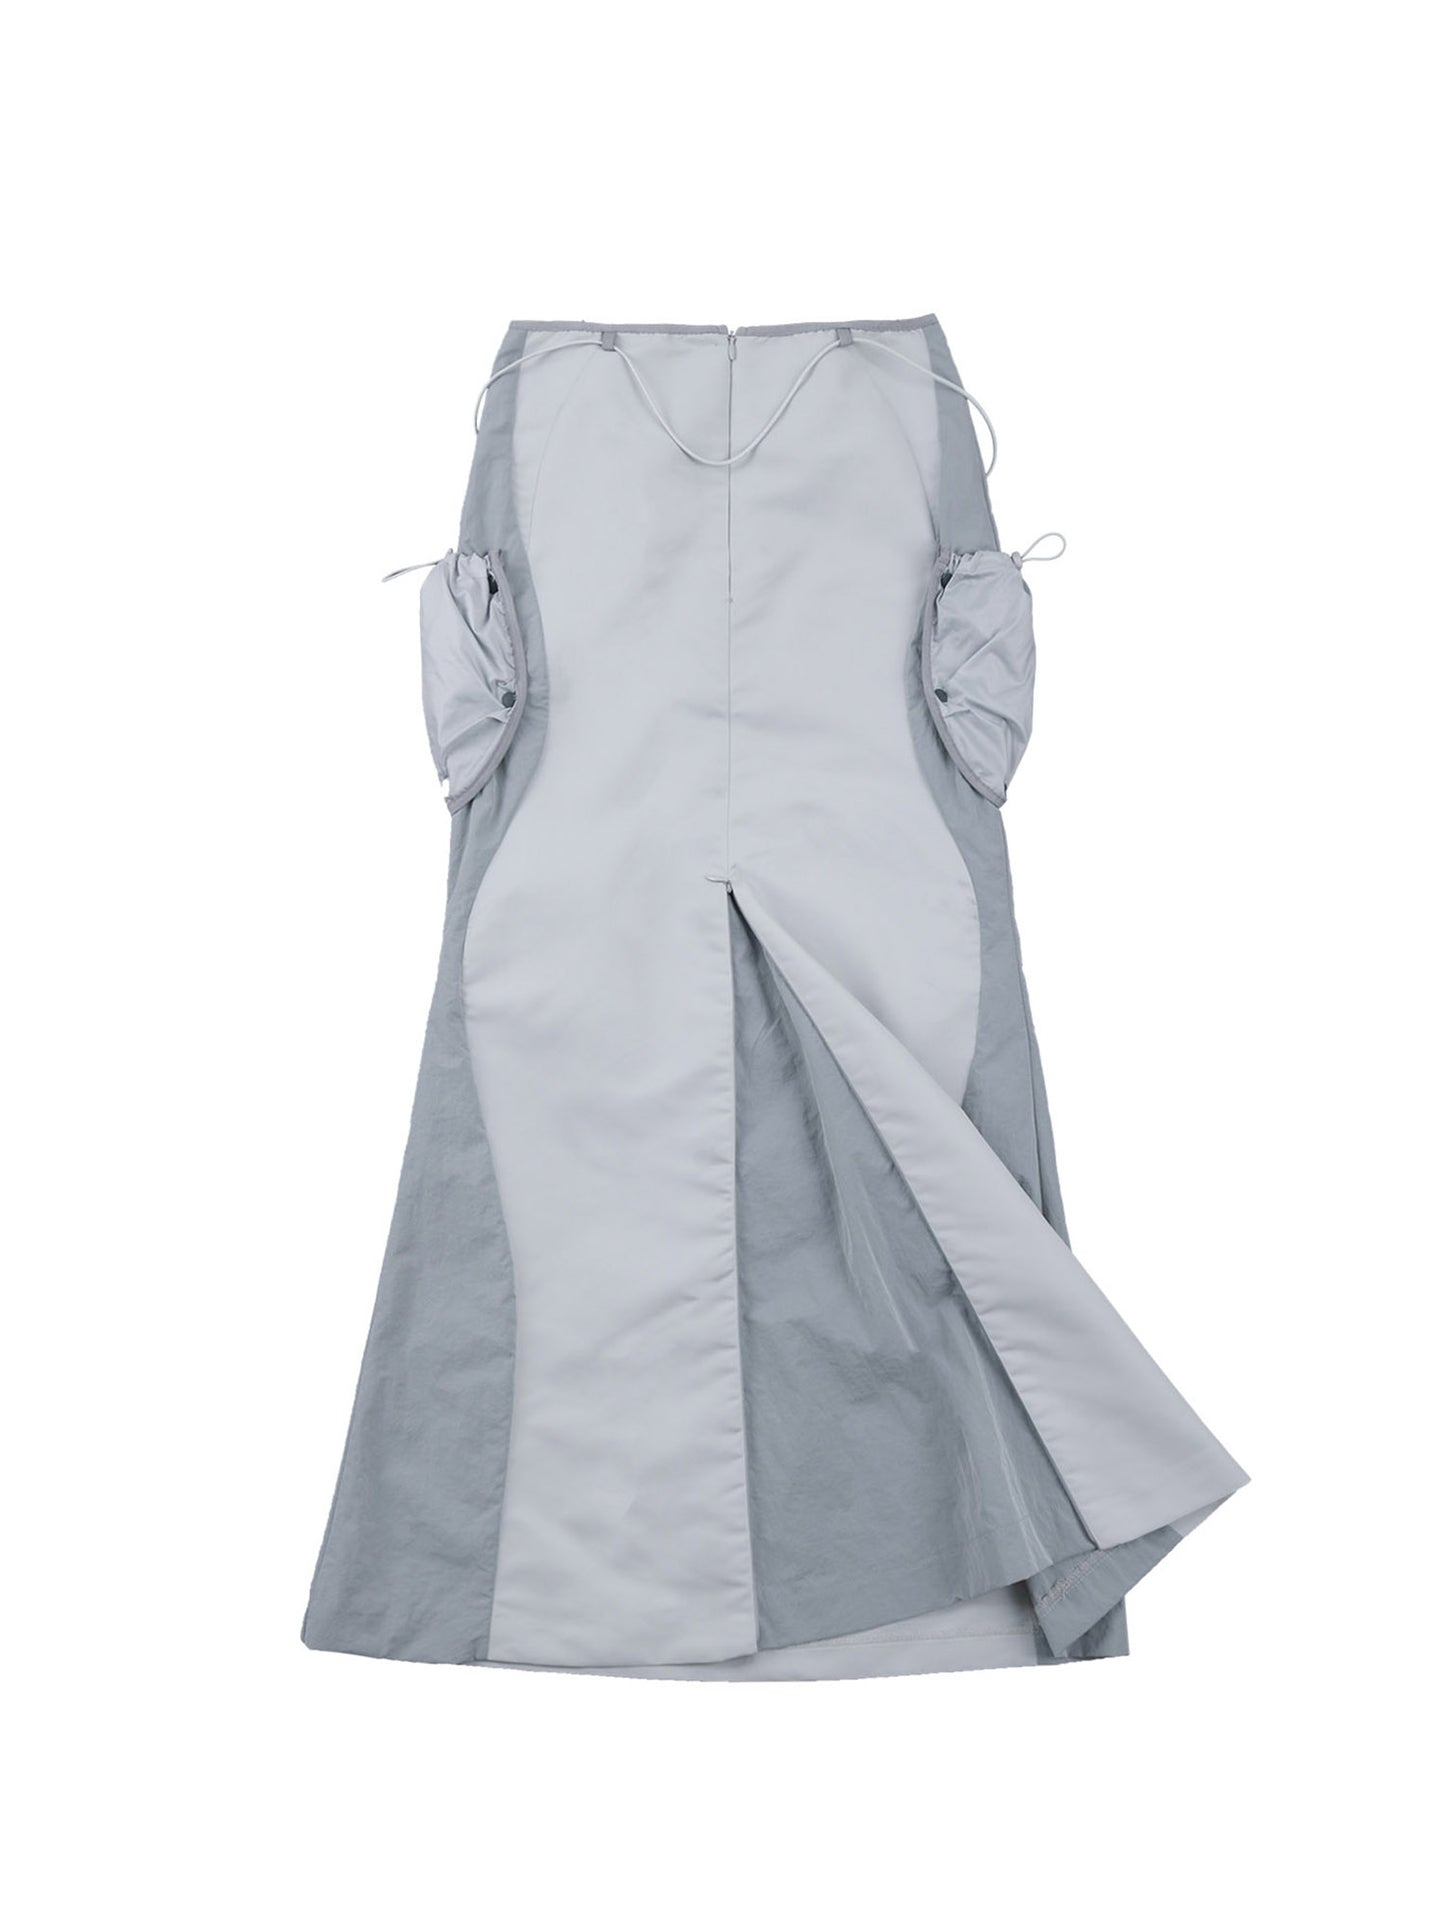 Pocket bag long skirt grey